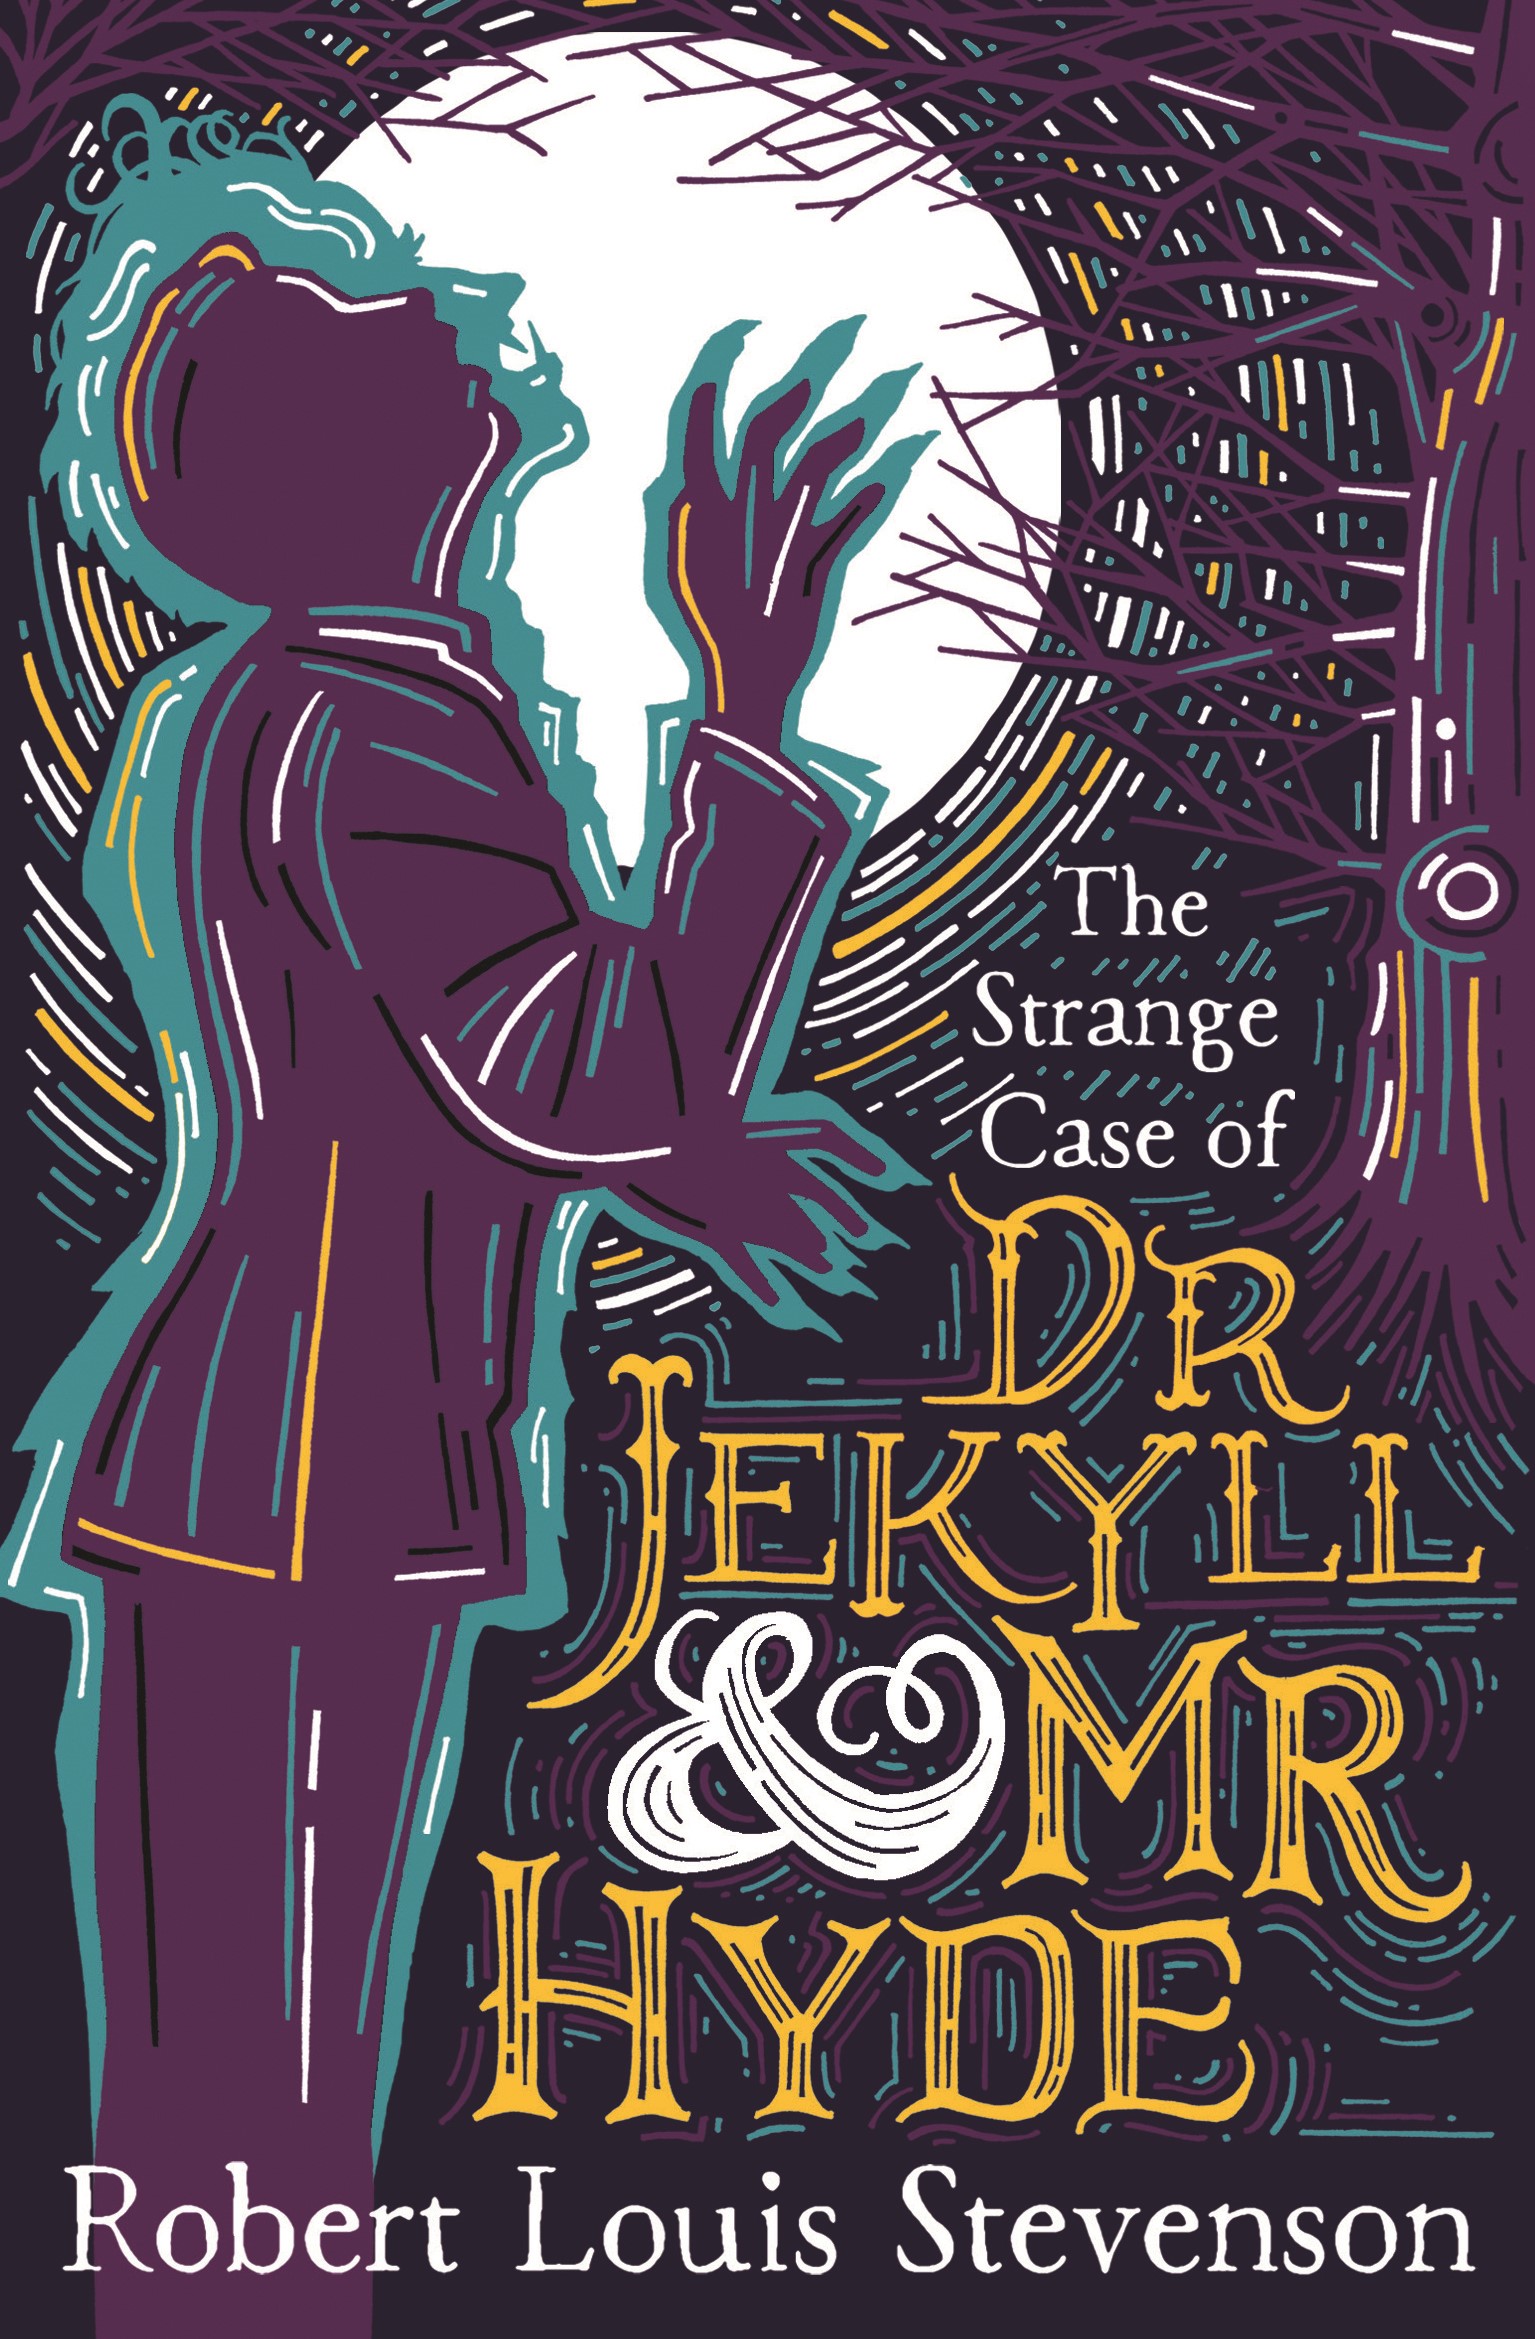 https://www.camanabay.com/media/fc8028d9-dfc0-4adb-a606-aefc8d29fb6c/dr-jekyll-mr-hyde-book-cover.jpg